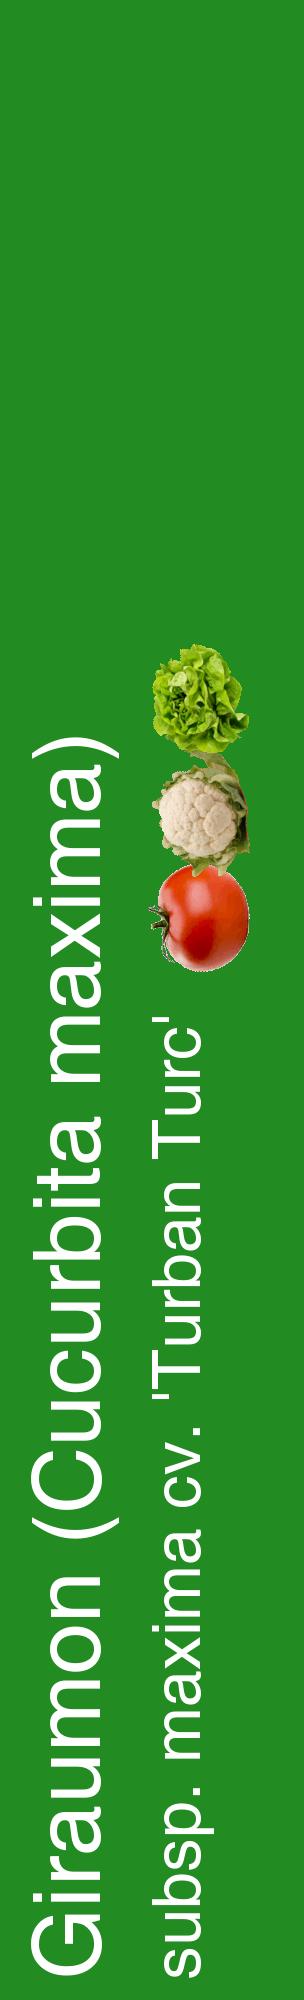 Étiquette de : Cucurbita maxima subsp. maxima cv. 'Turban Turc' - format c - style blanche10_basiquehel avec comestibilité simplifiée